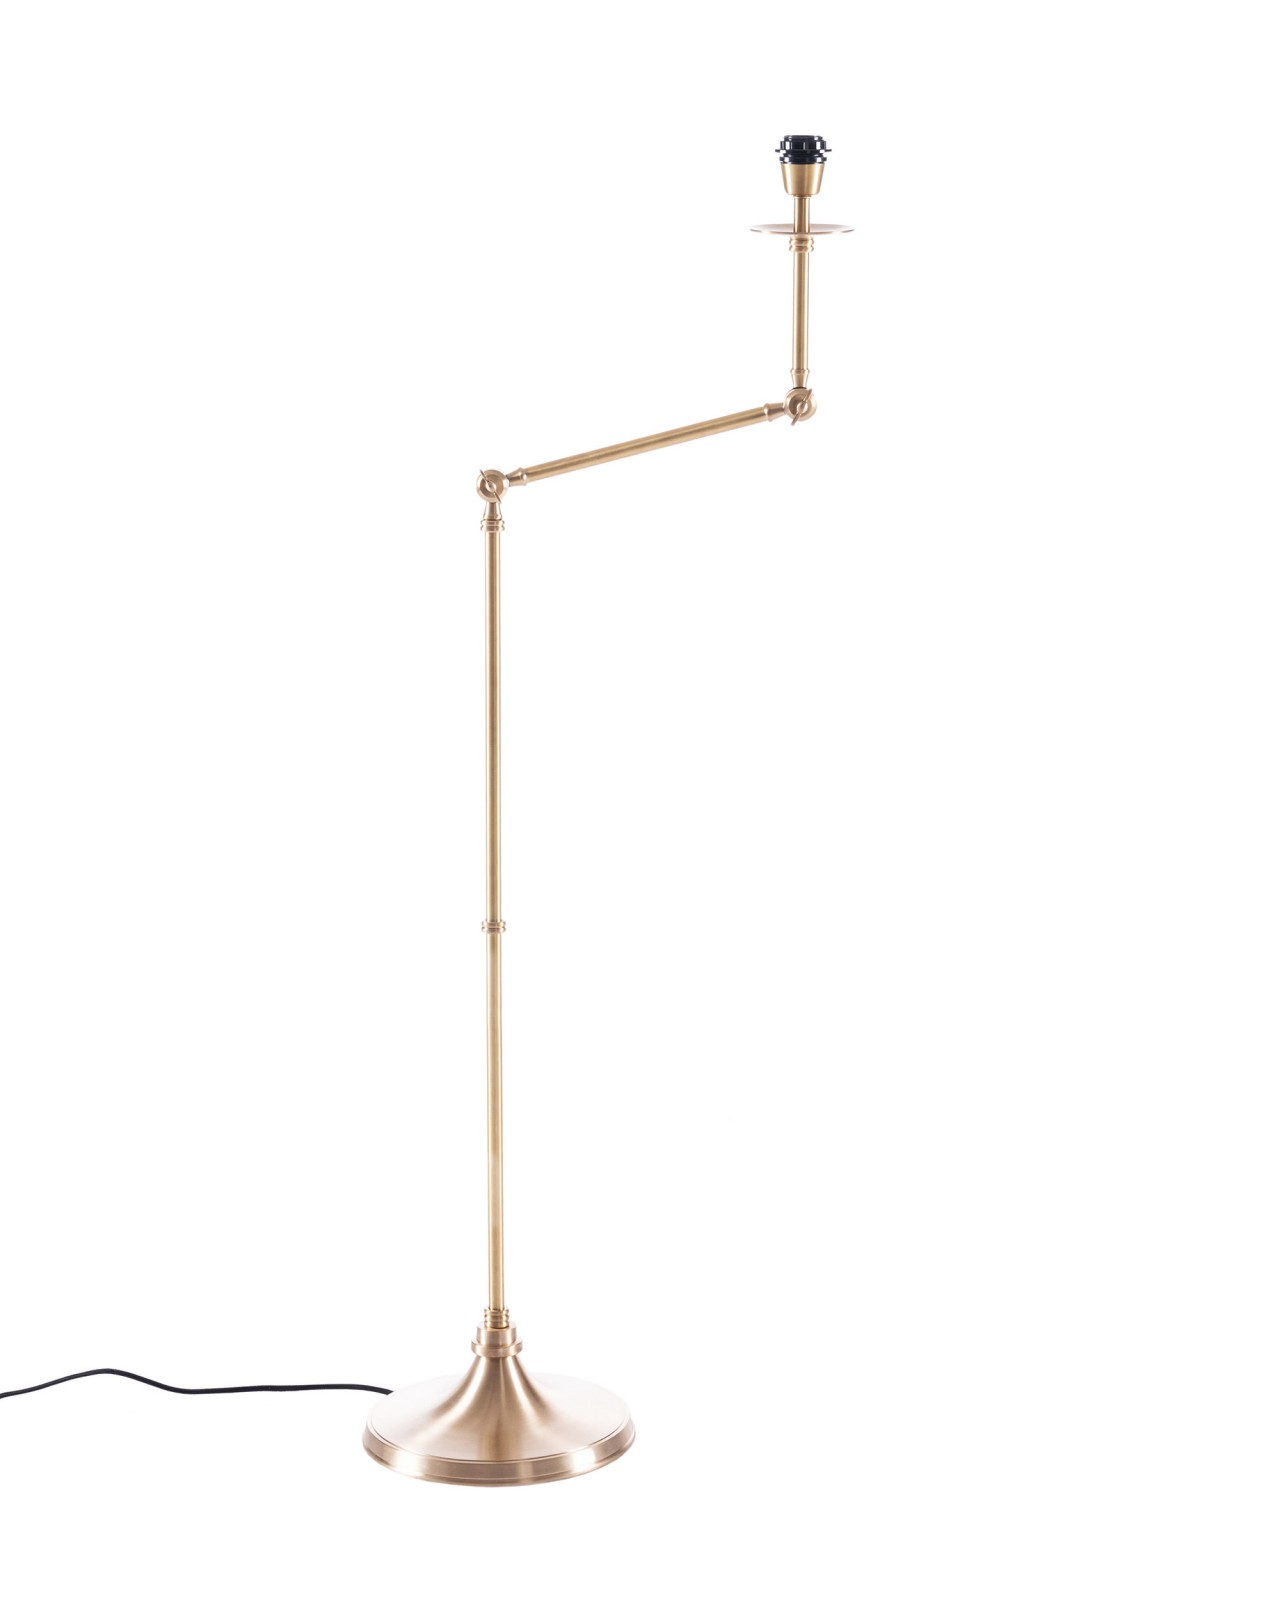 KRAMER Floor Lamp in Antique Brass